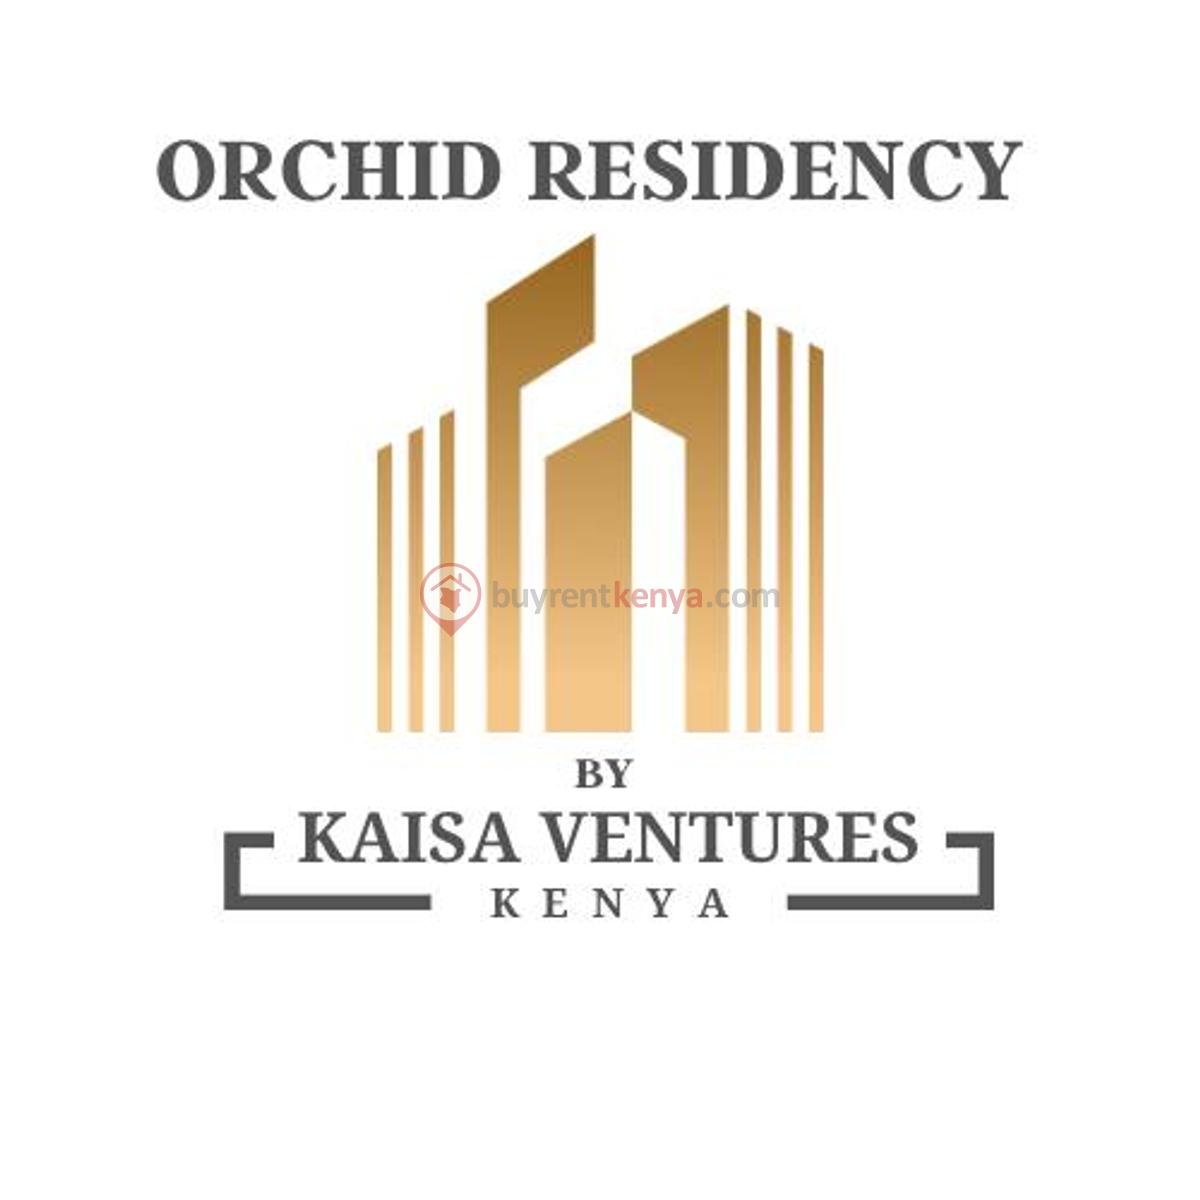 Kaisa Ventures Kenya Co. Ltd